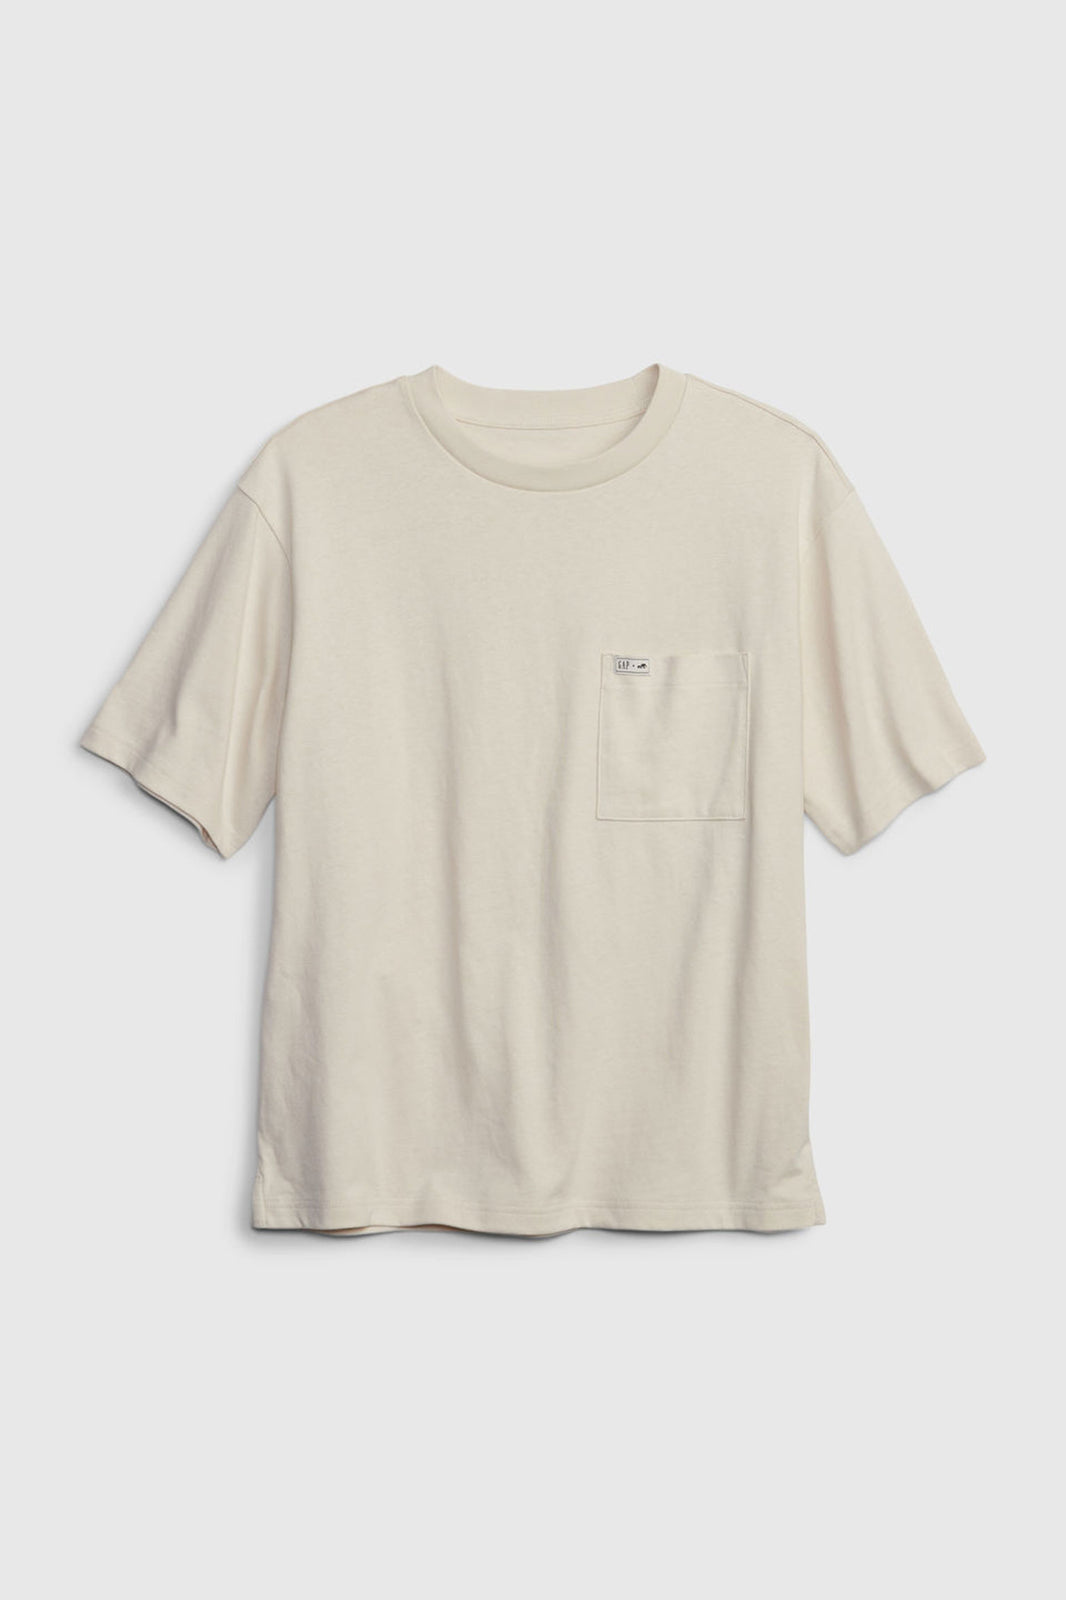 Adult Gap x BKc Pocket T-Shirt (White)